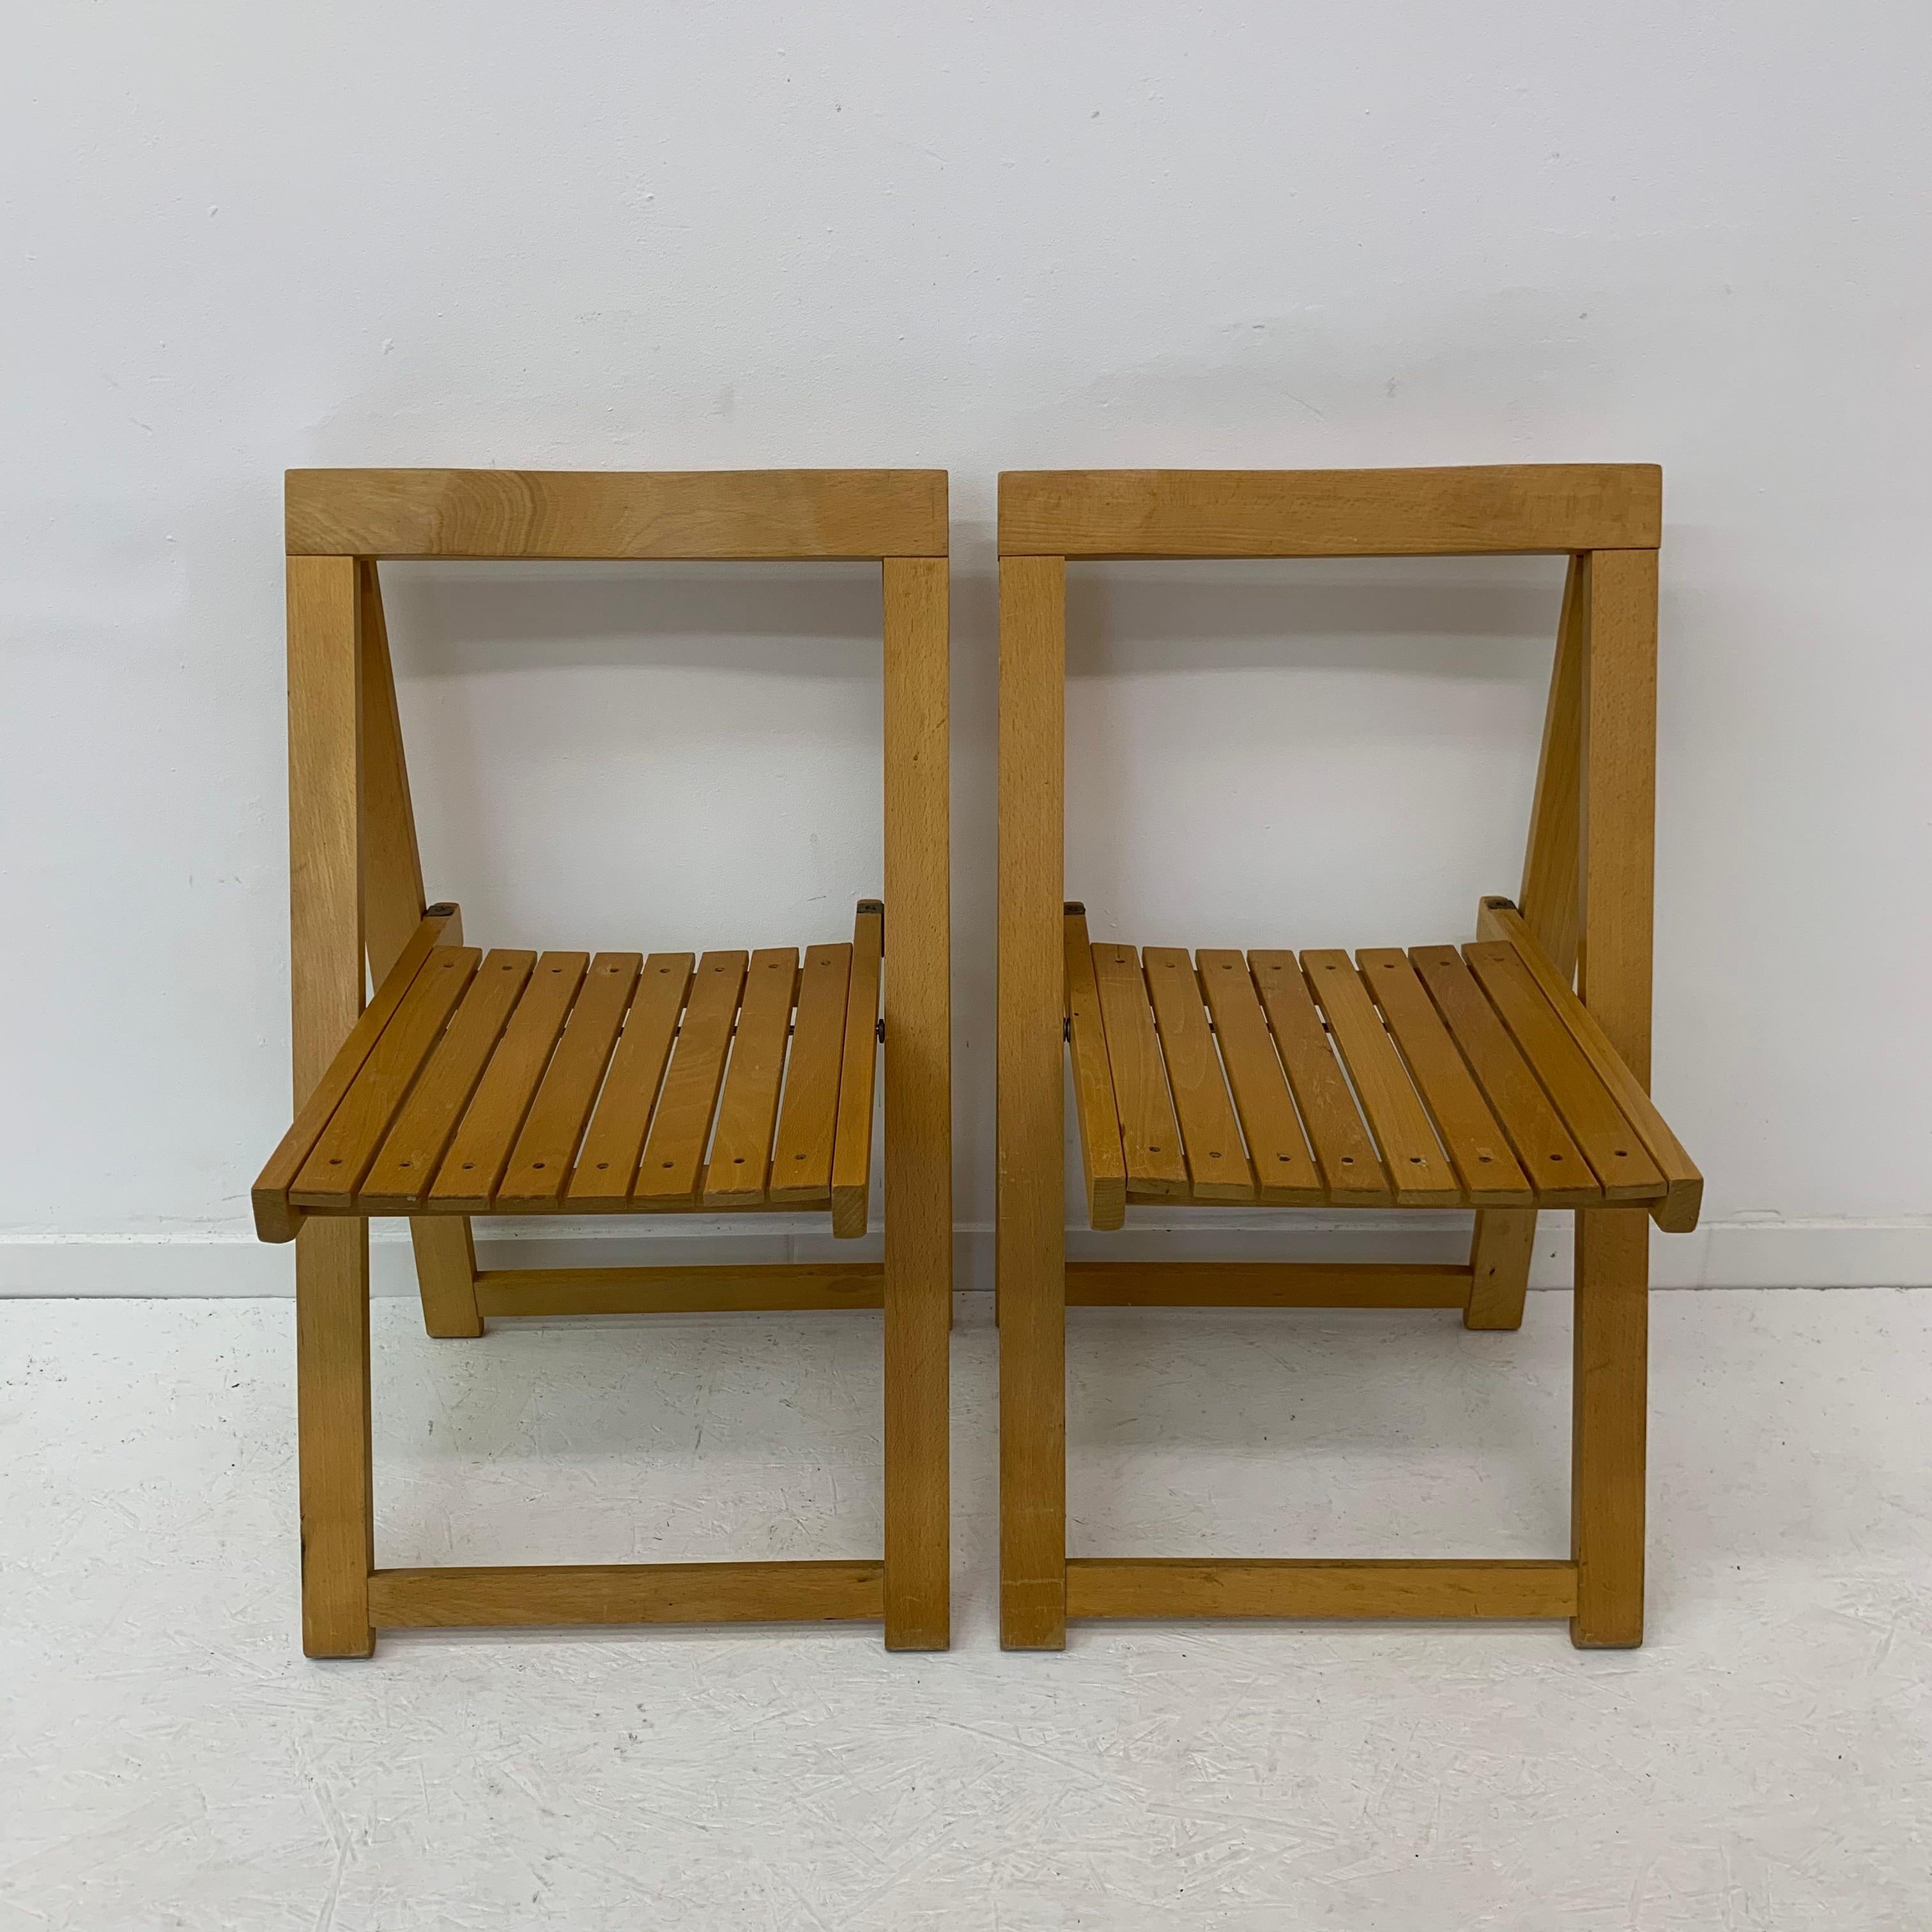 Dimensions: 45,5cm W, 45cmD, 75cm H, 45cm H seat
Condition: Good
Material: Wood
Designer: Aldo Jacober
Producer: Alberto Bazzani
Period: 1960’s